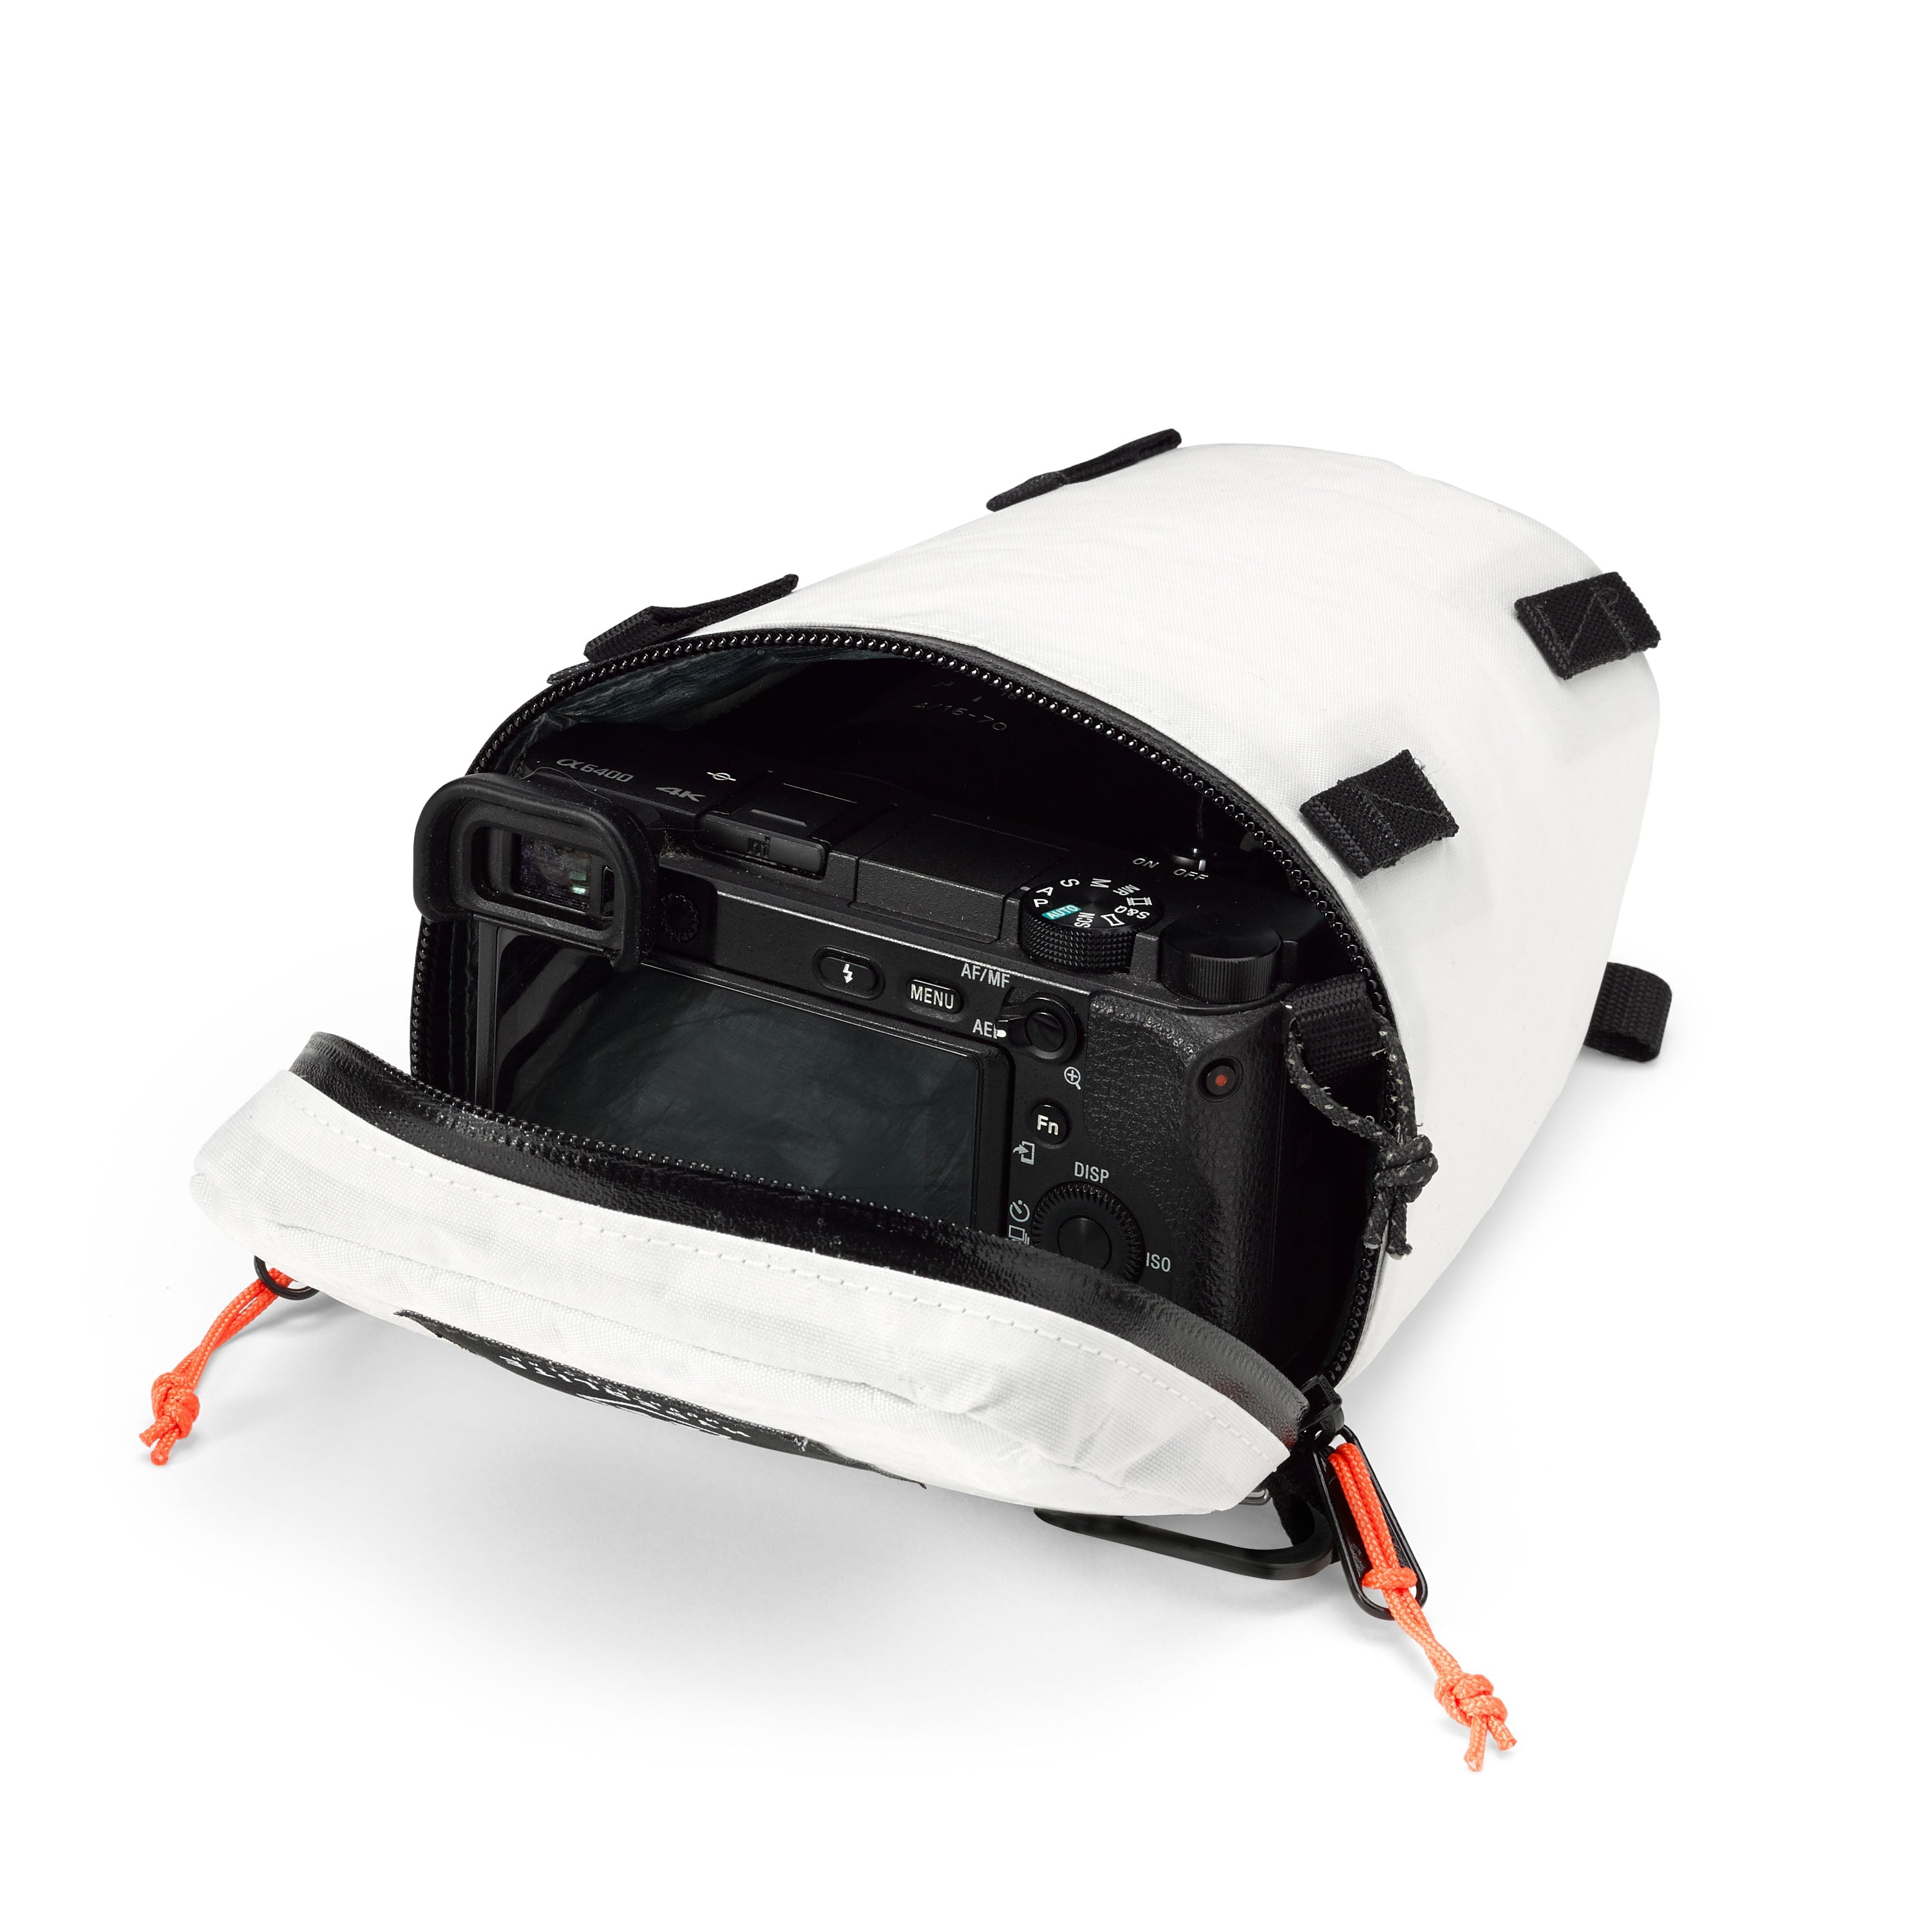 Camera Bag for Hiking - Hyperlite Mountain Gear Camera Pod